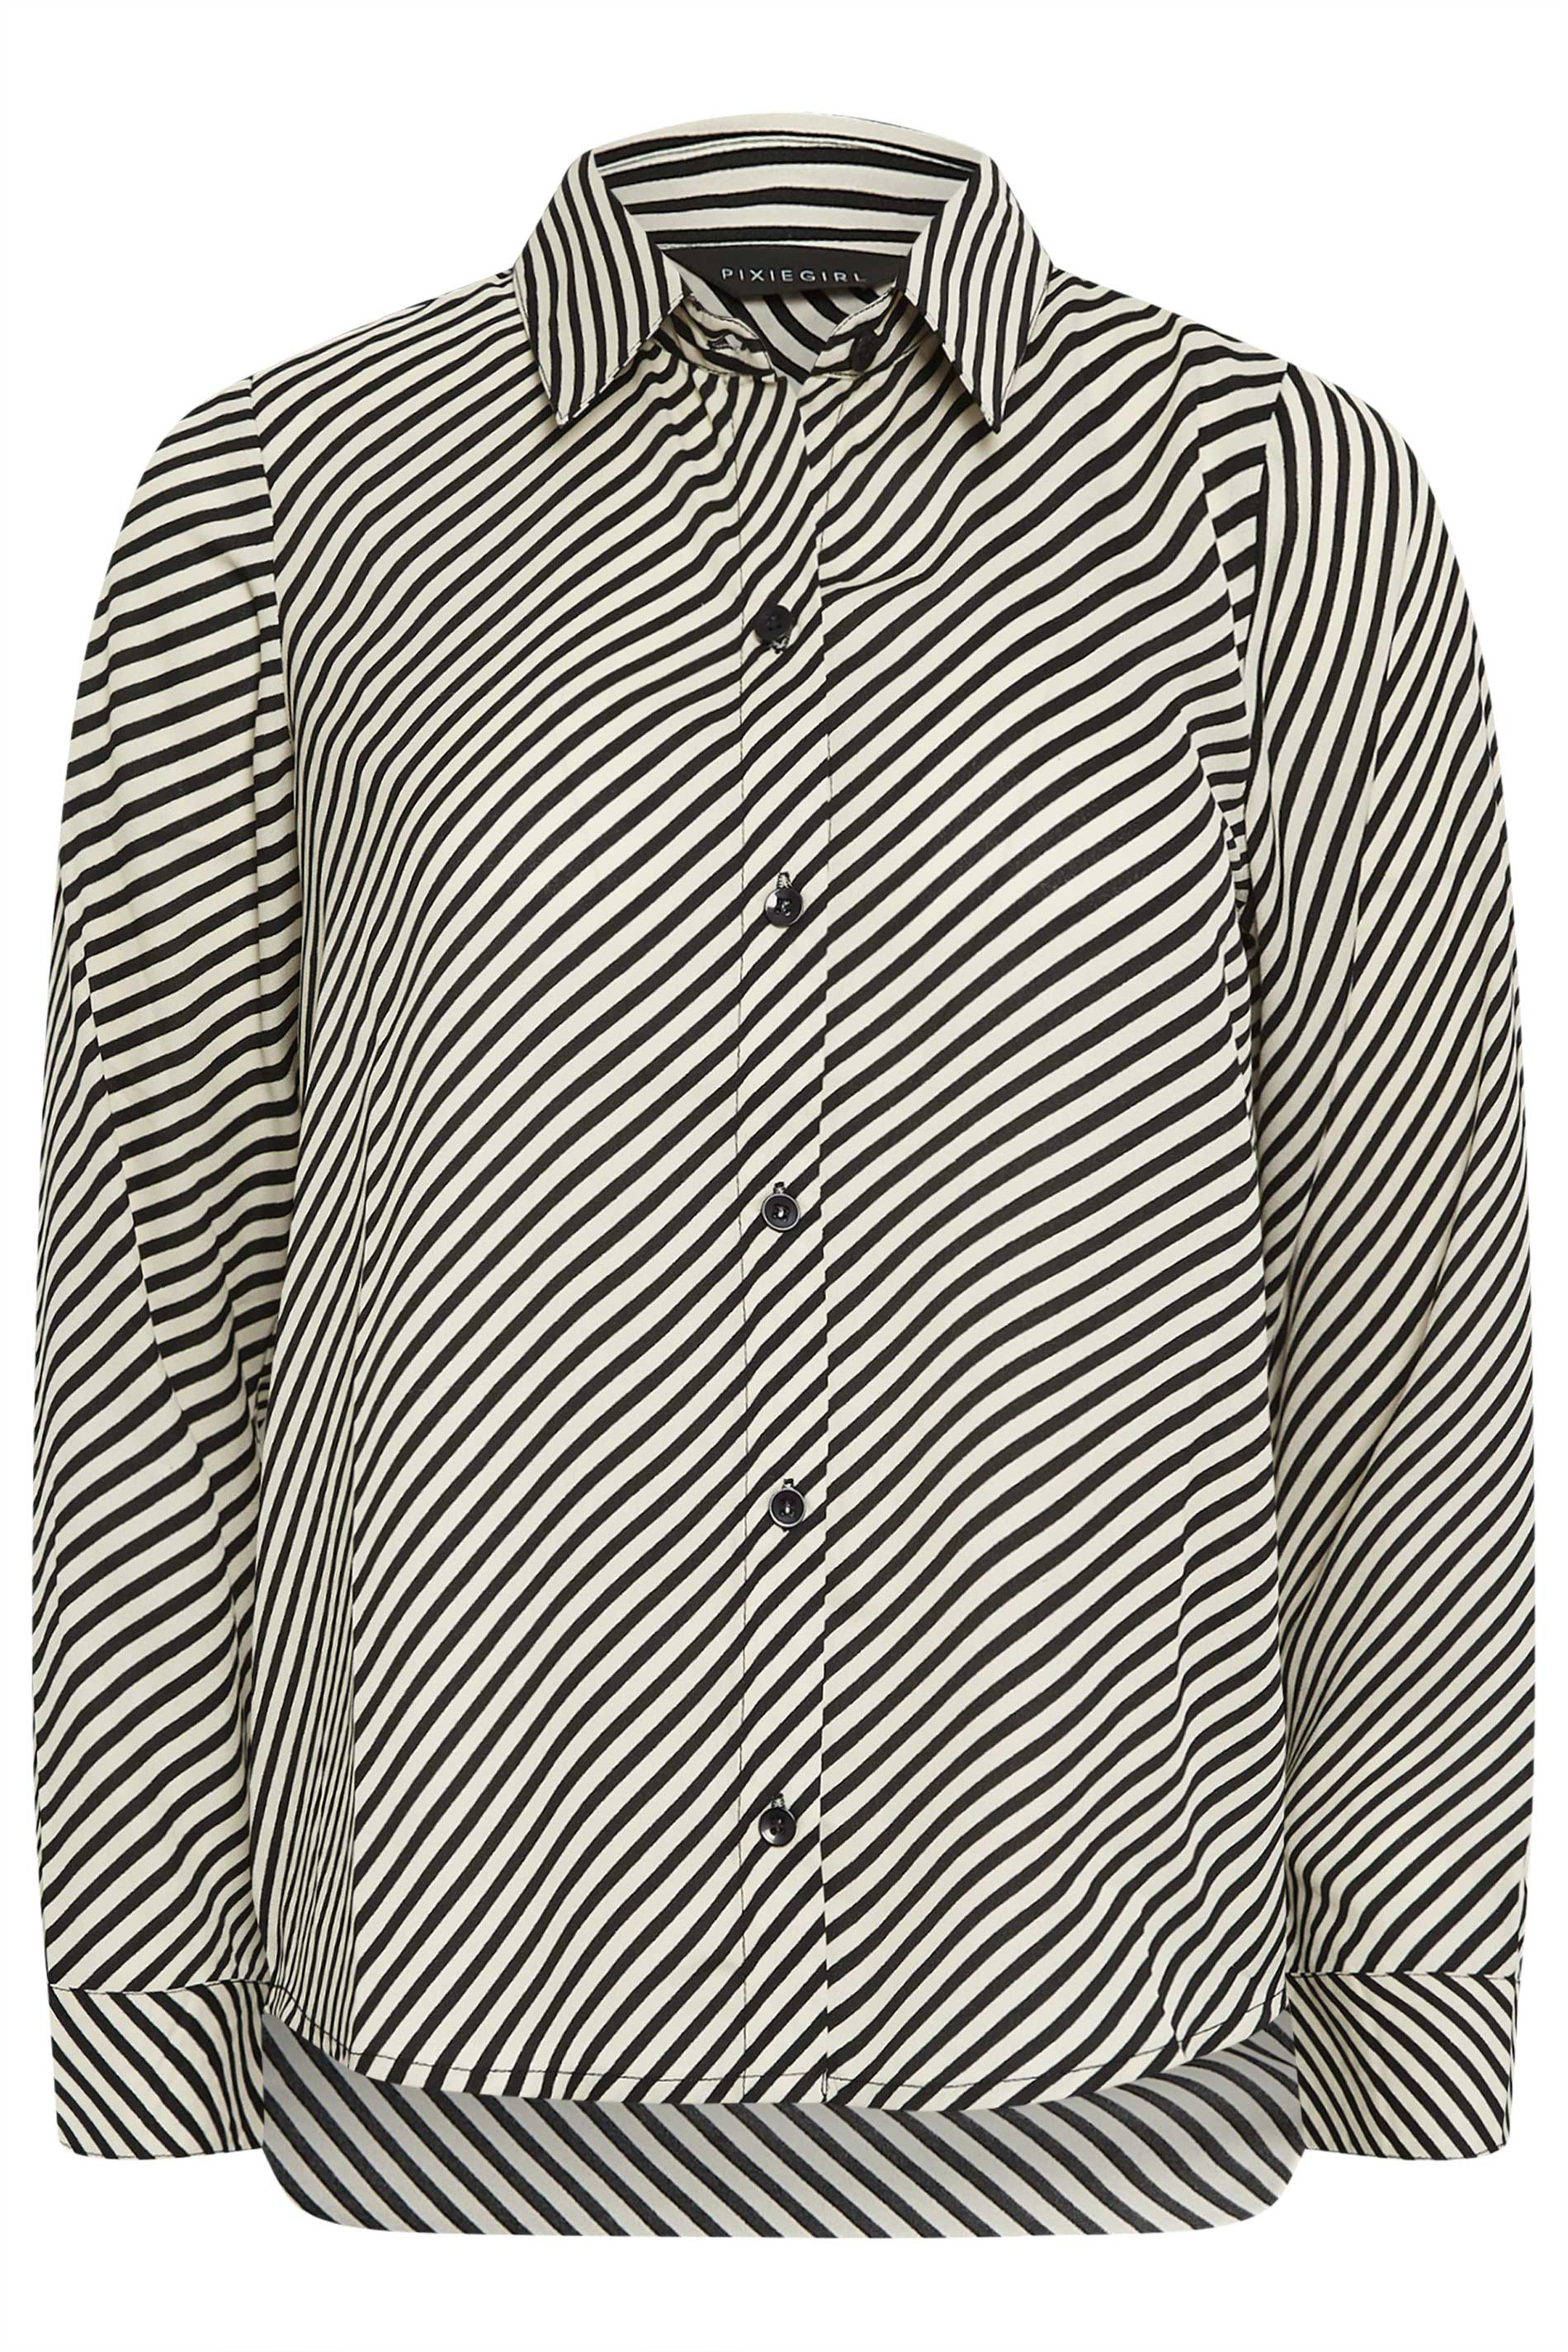 PixieGirl Petite Womens Black Stripe Shirt | PixieGirl